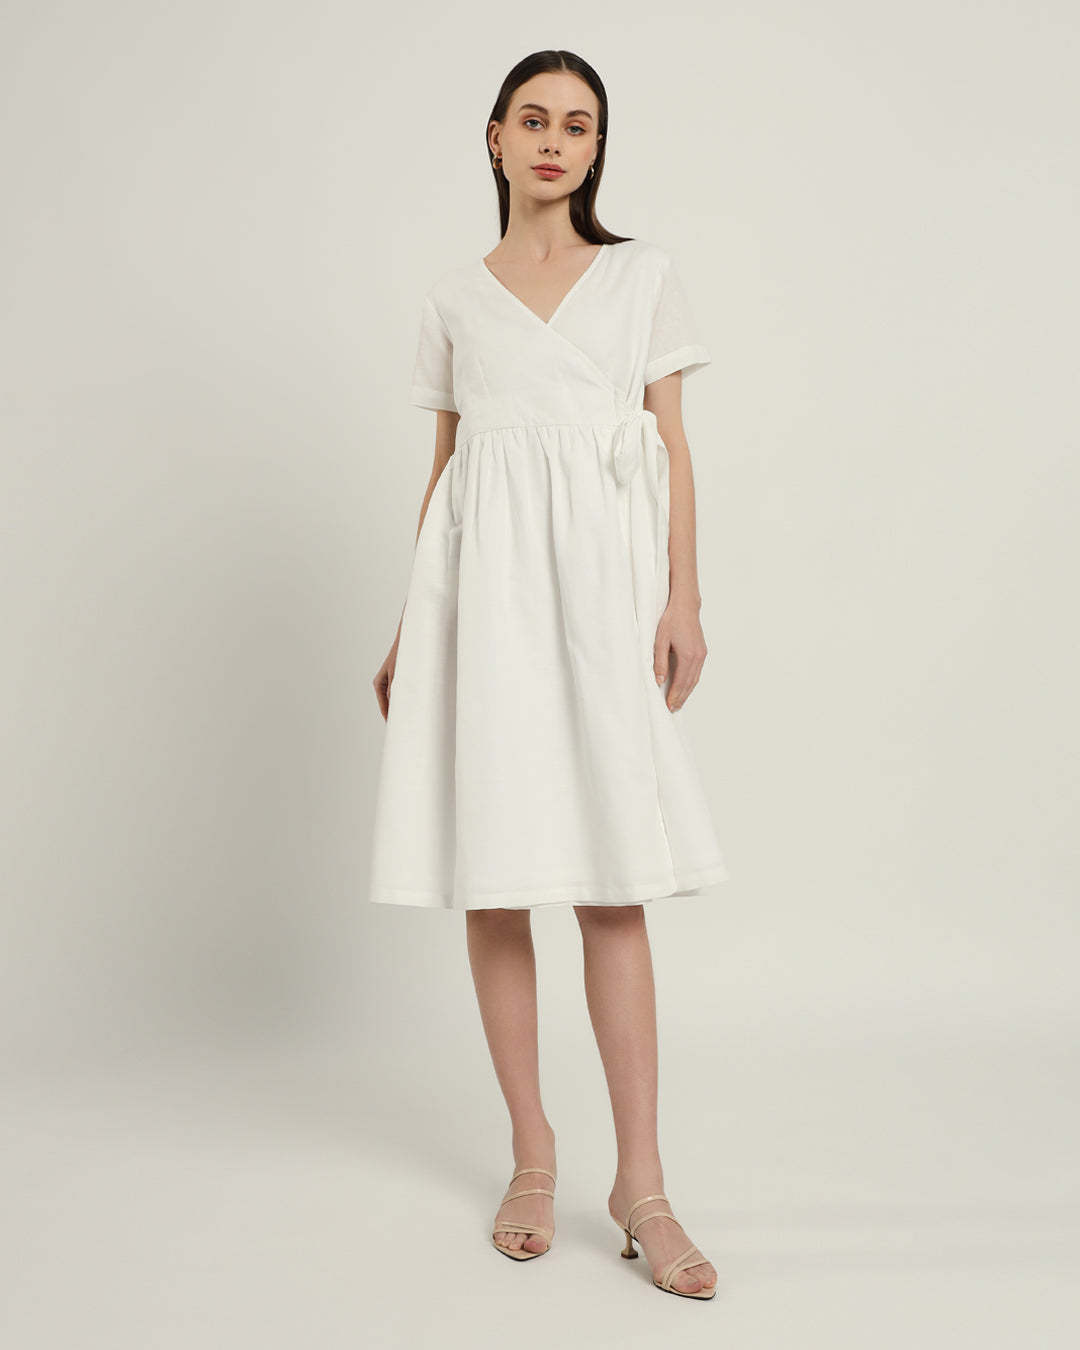 The Miyoshi Daisy White Linen Dress